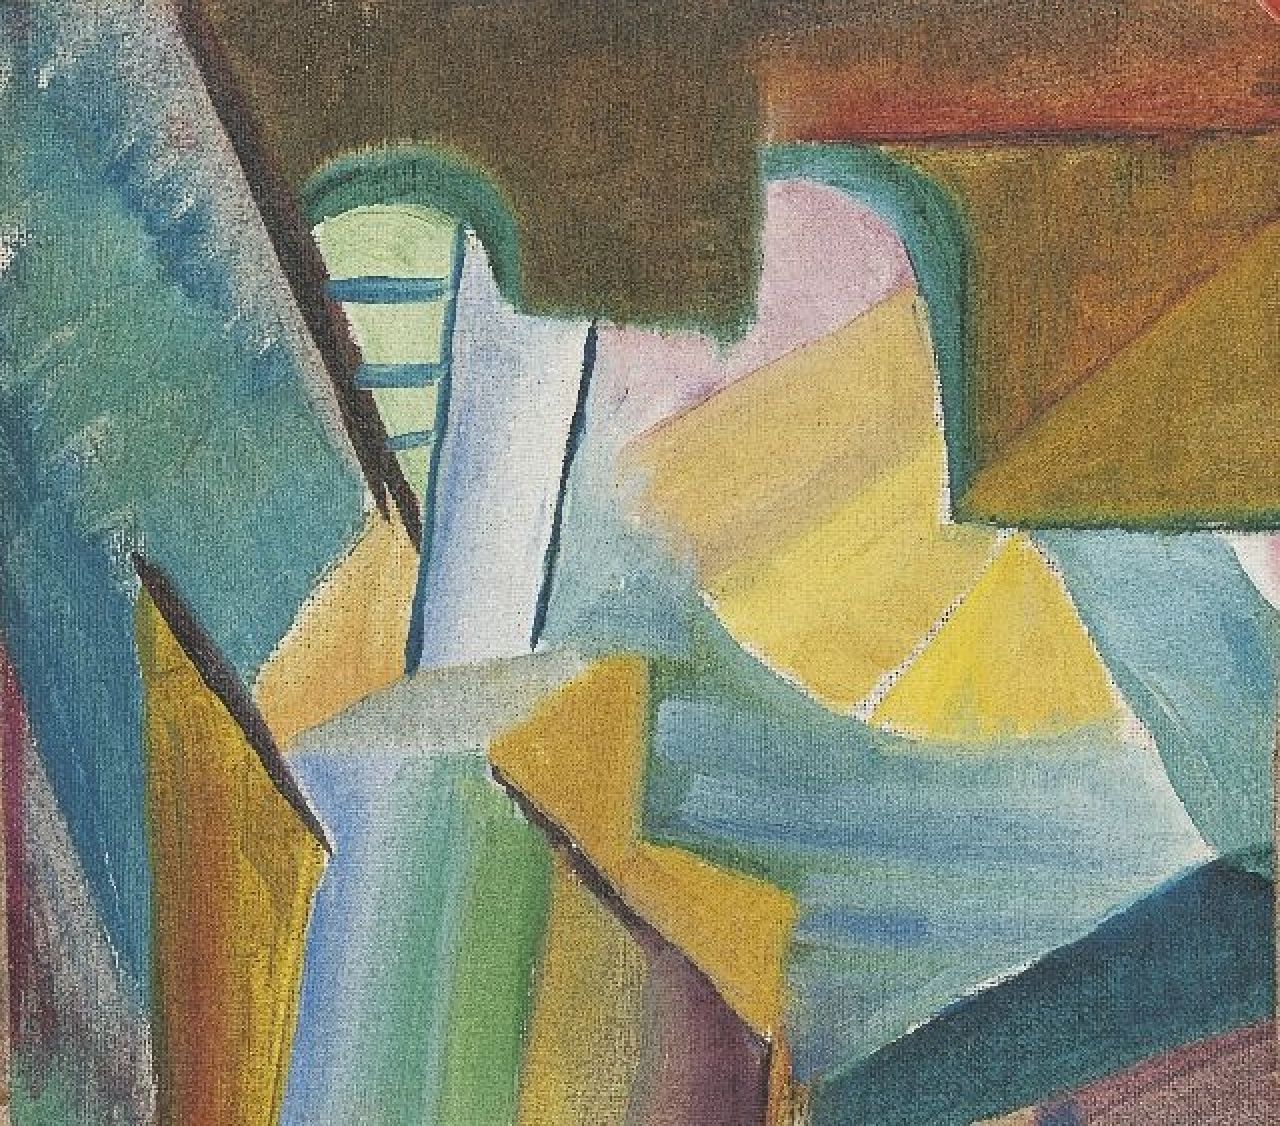 Freundlich O.  | Otto Freundlich, Composition, oil on canvas 16.4 x 18.7 cm, painted in 1928